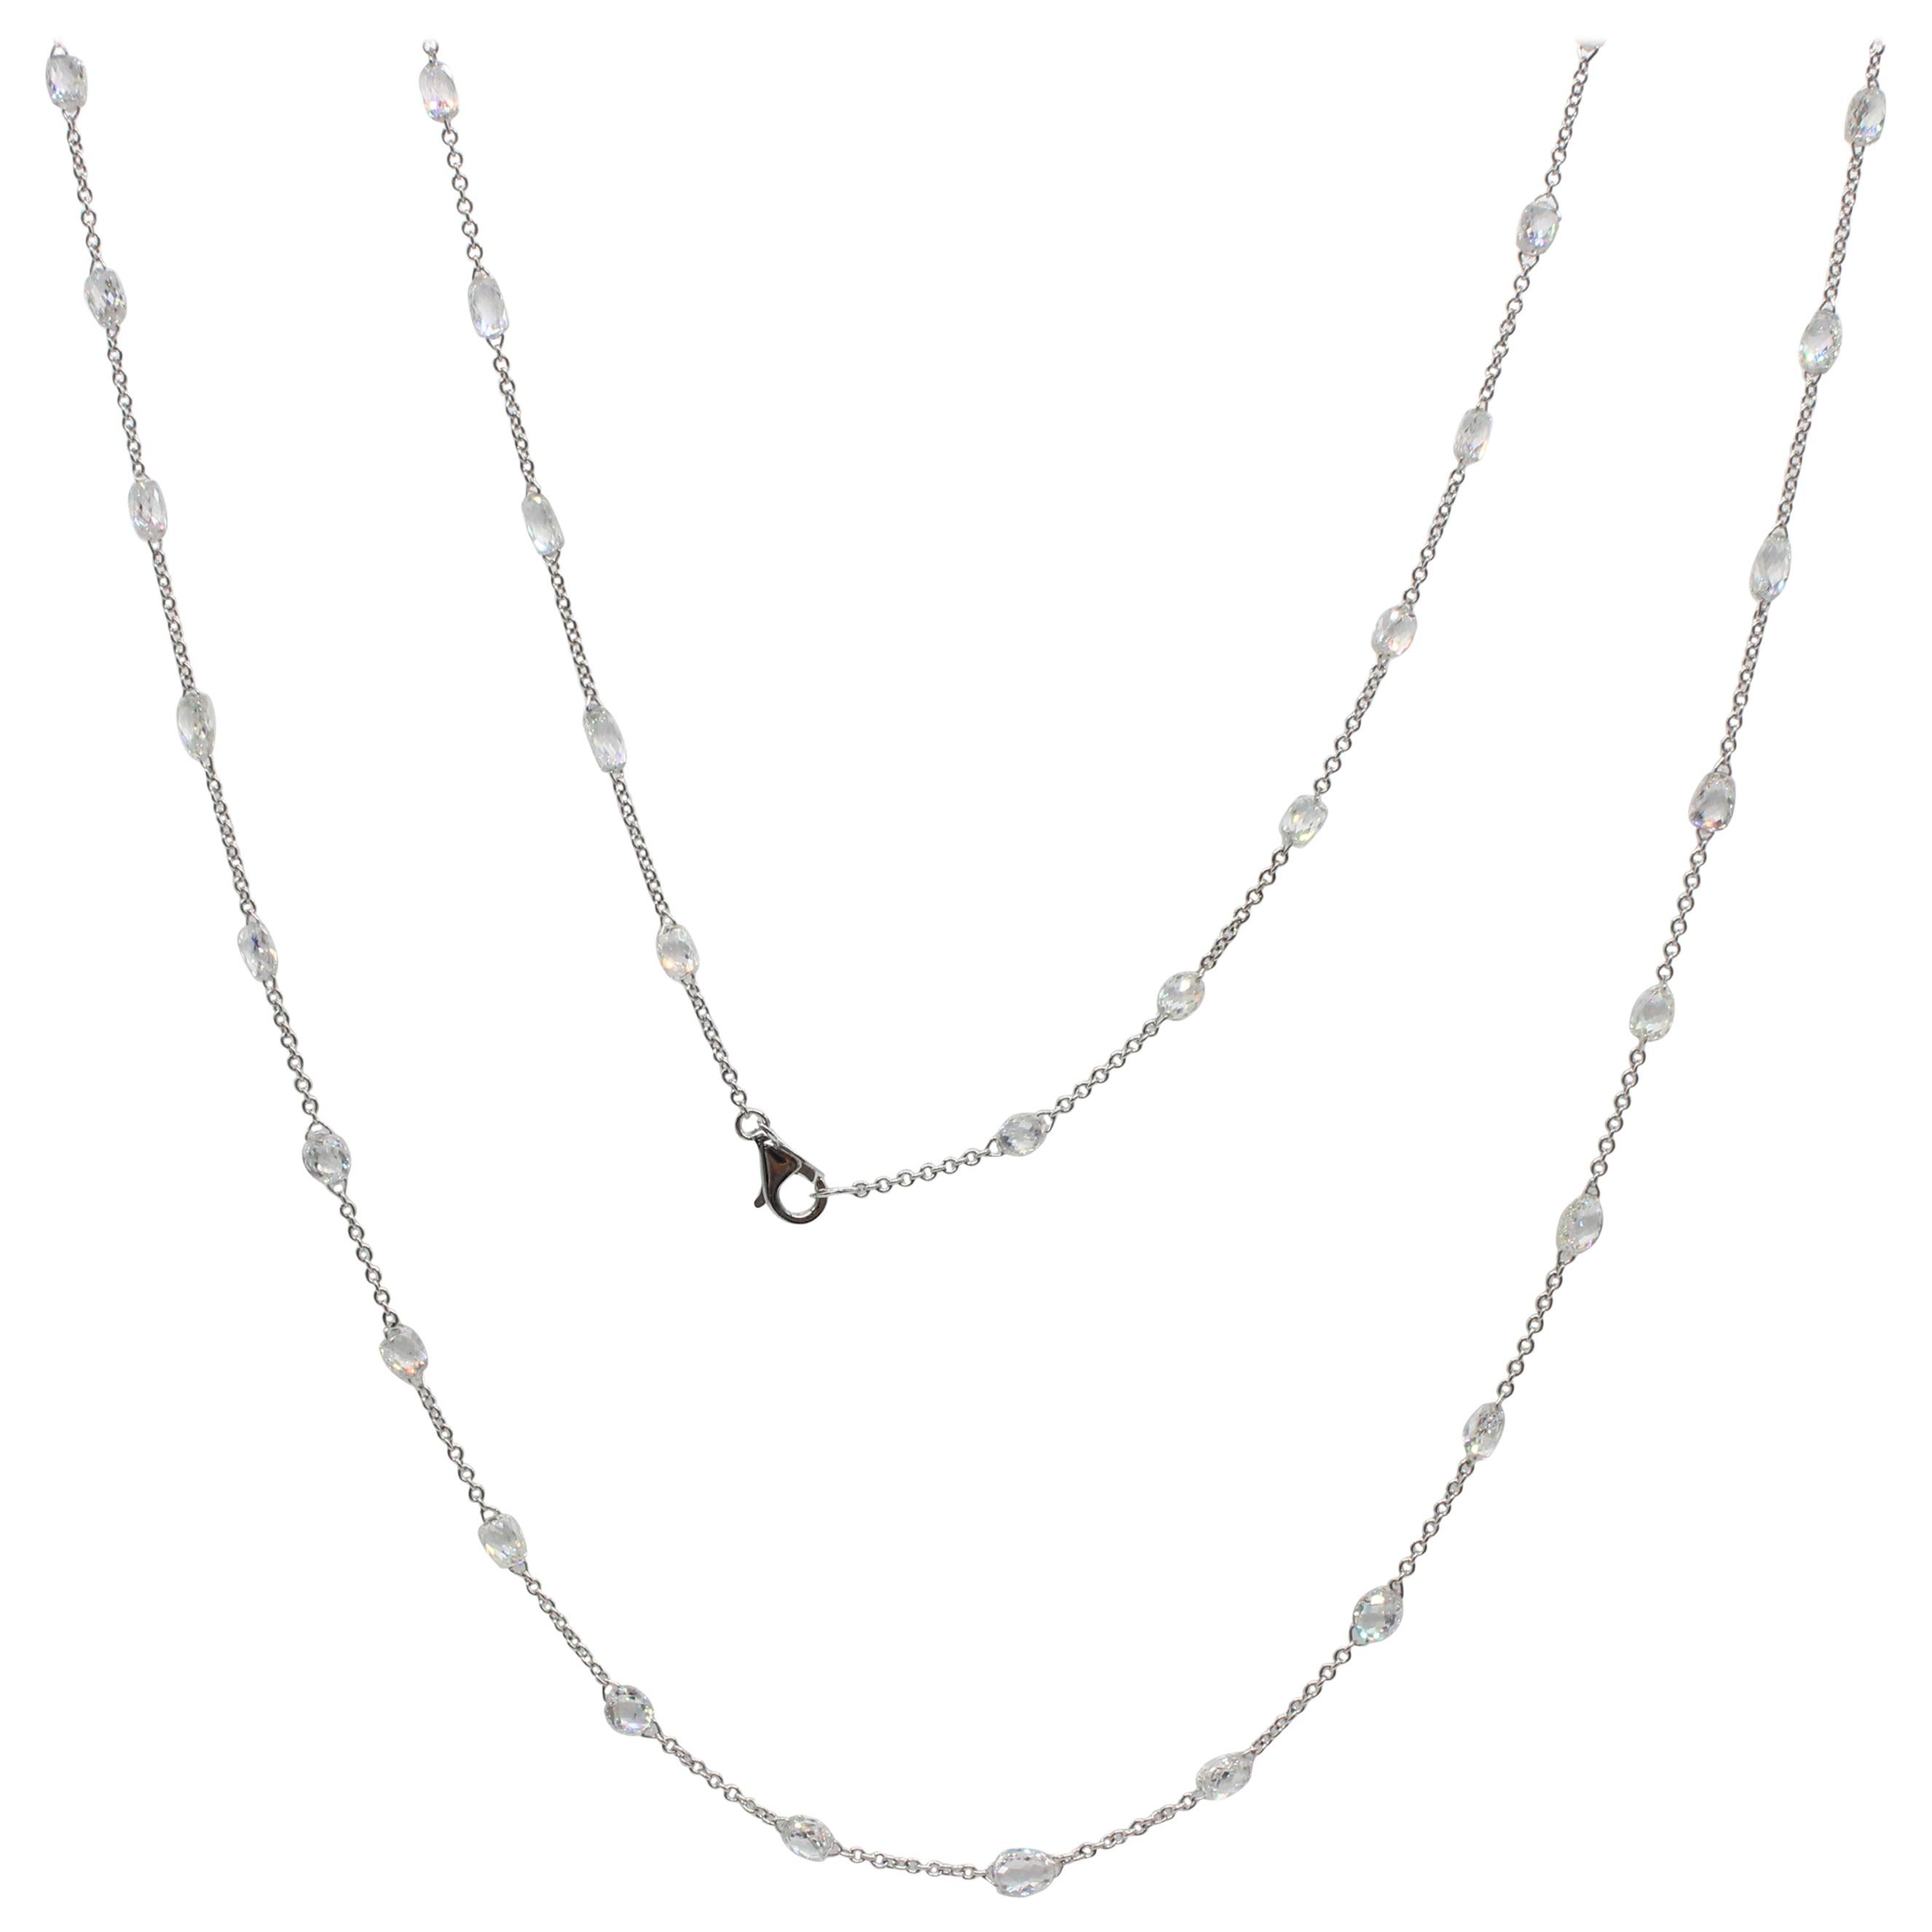 PANIM 16.17 Carat Diamond Briolette 18K White Gold Necklace